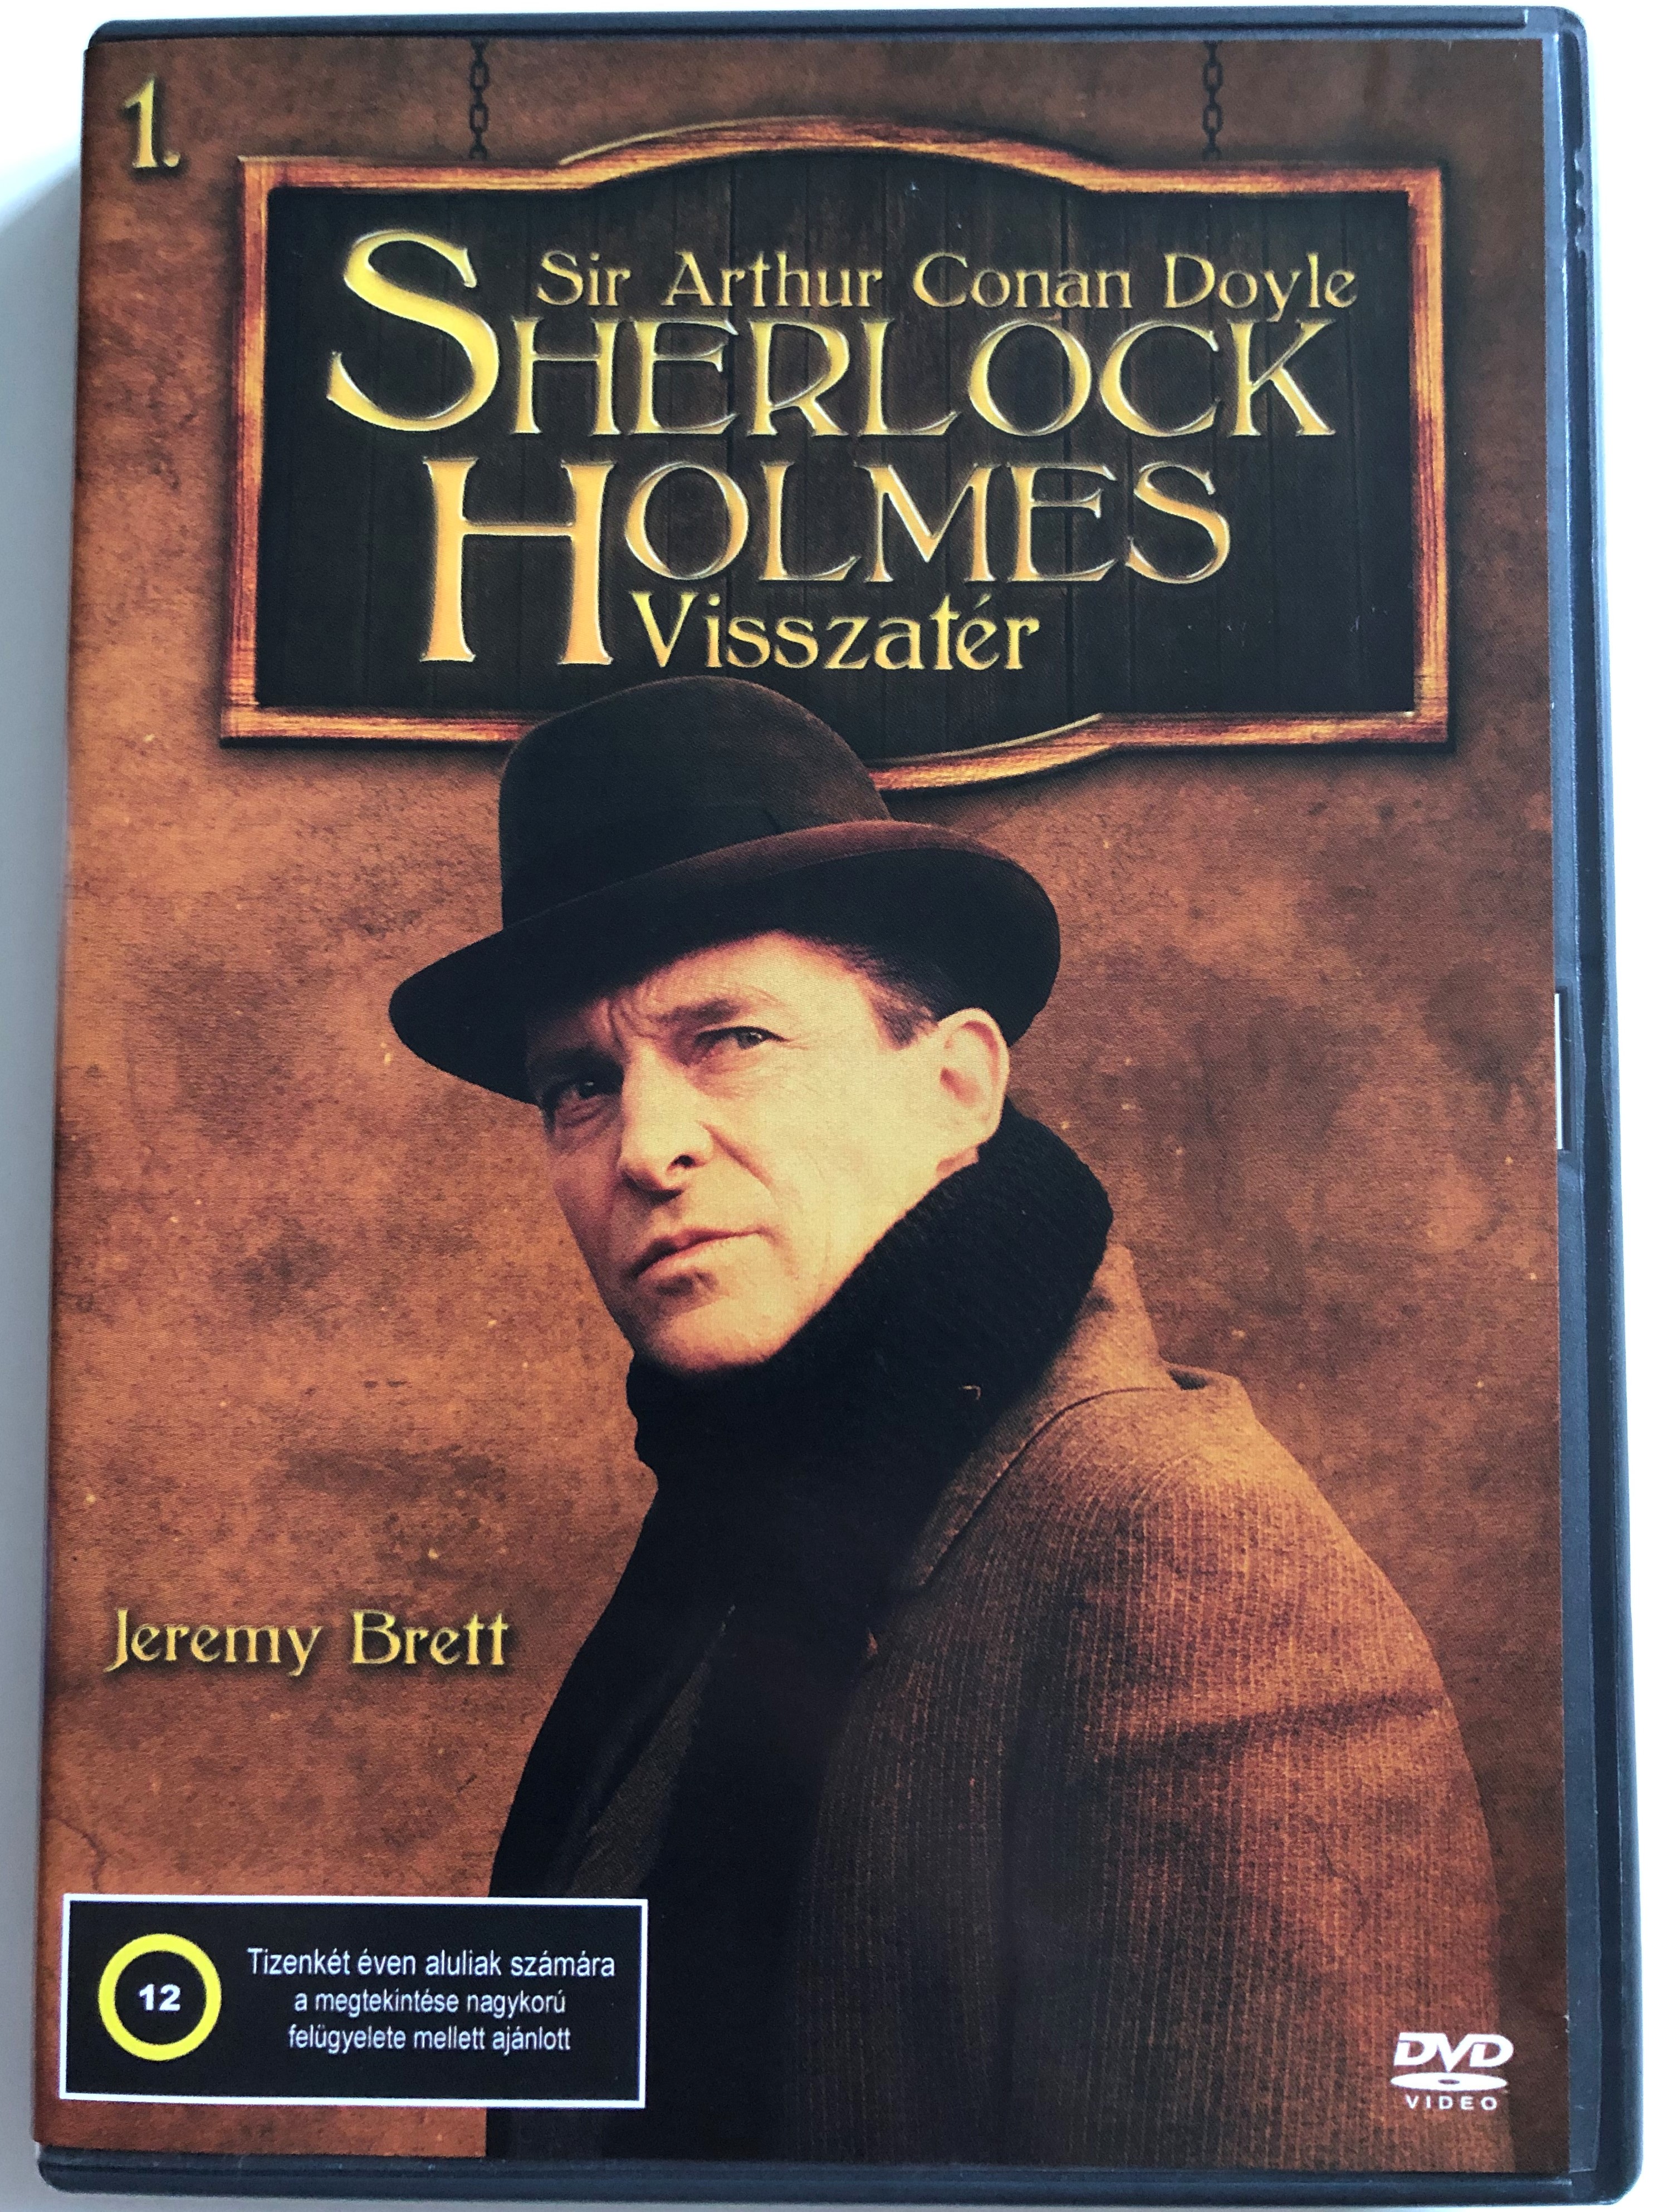 the-return-of-sherlock-holmes-dvd-1986-sherlock-holmes-visszat-r-1.-directed-by-peter-hammond-howard-baker-written-by-sir-arthur-conan-doyle-episodes-the-abbey-grange-the-empty-house-1-.jpg